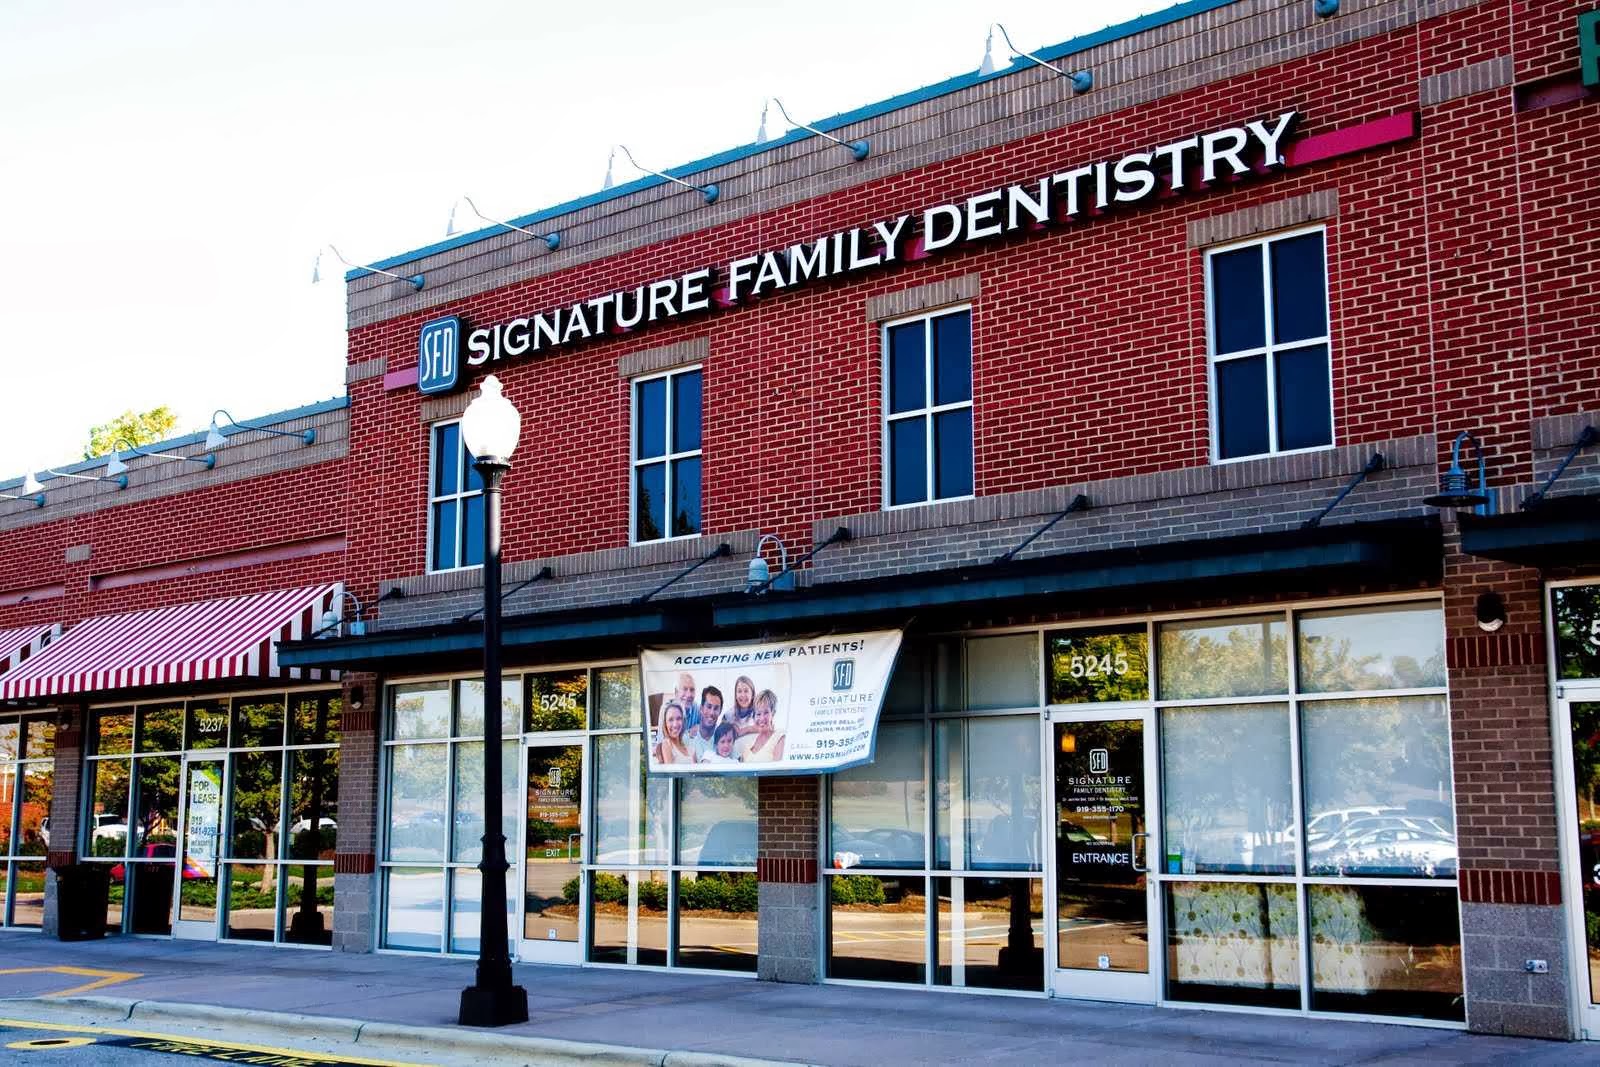 Signature Family Dentistry